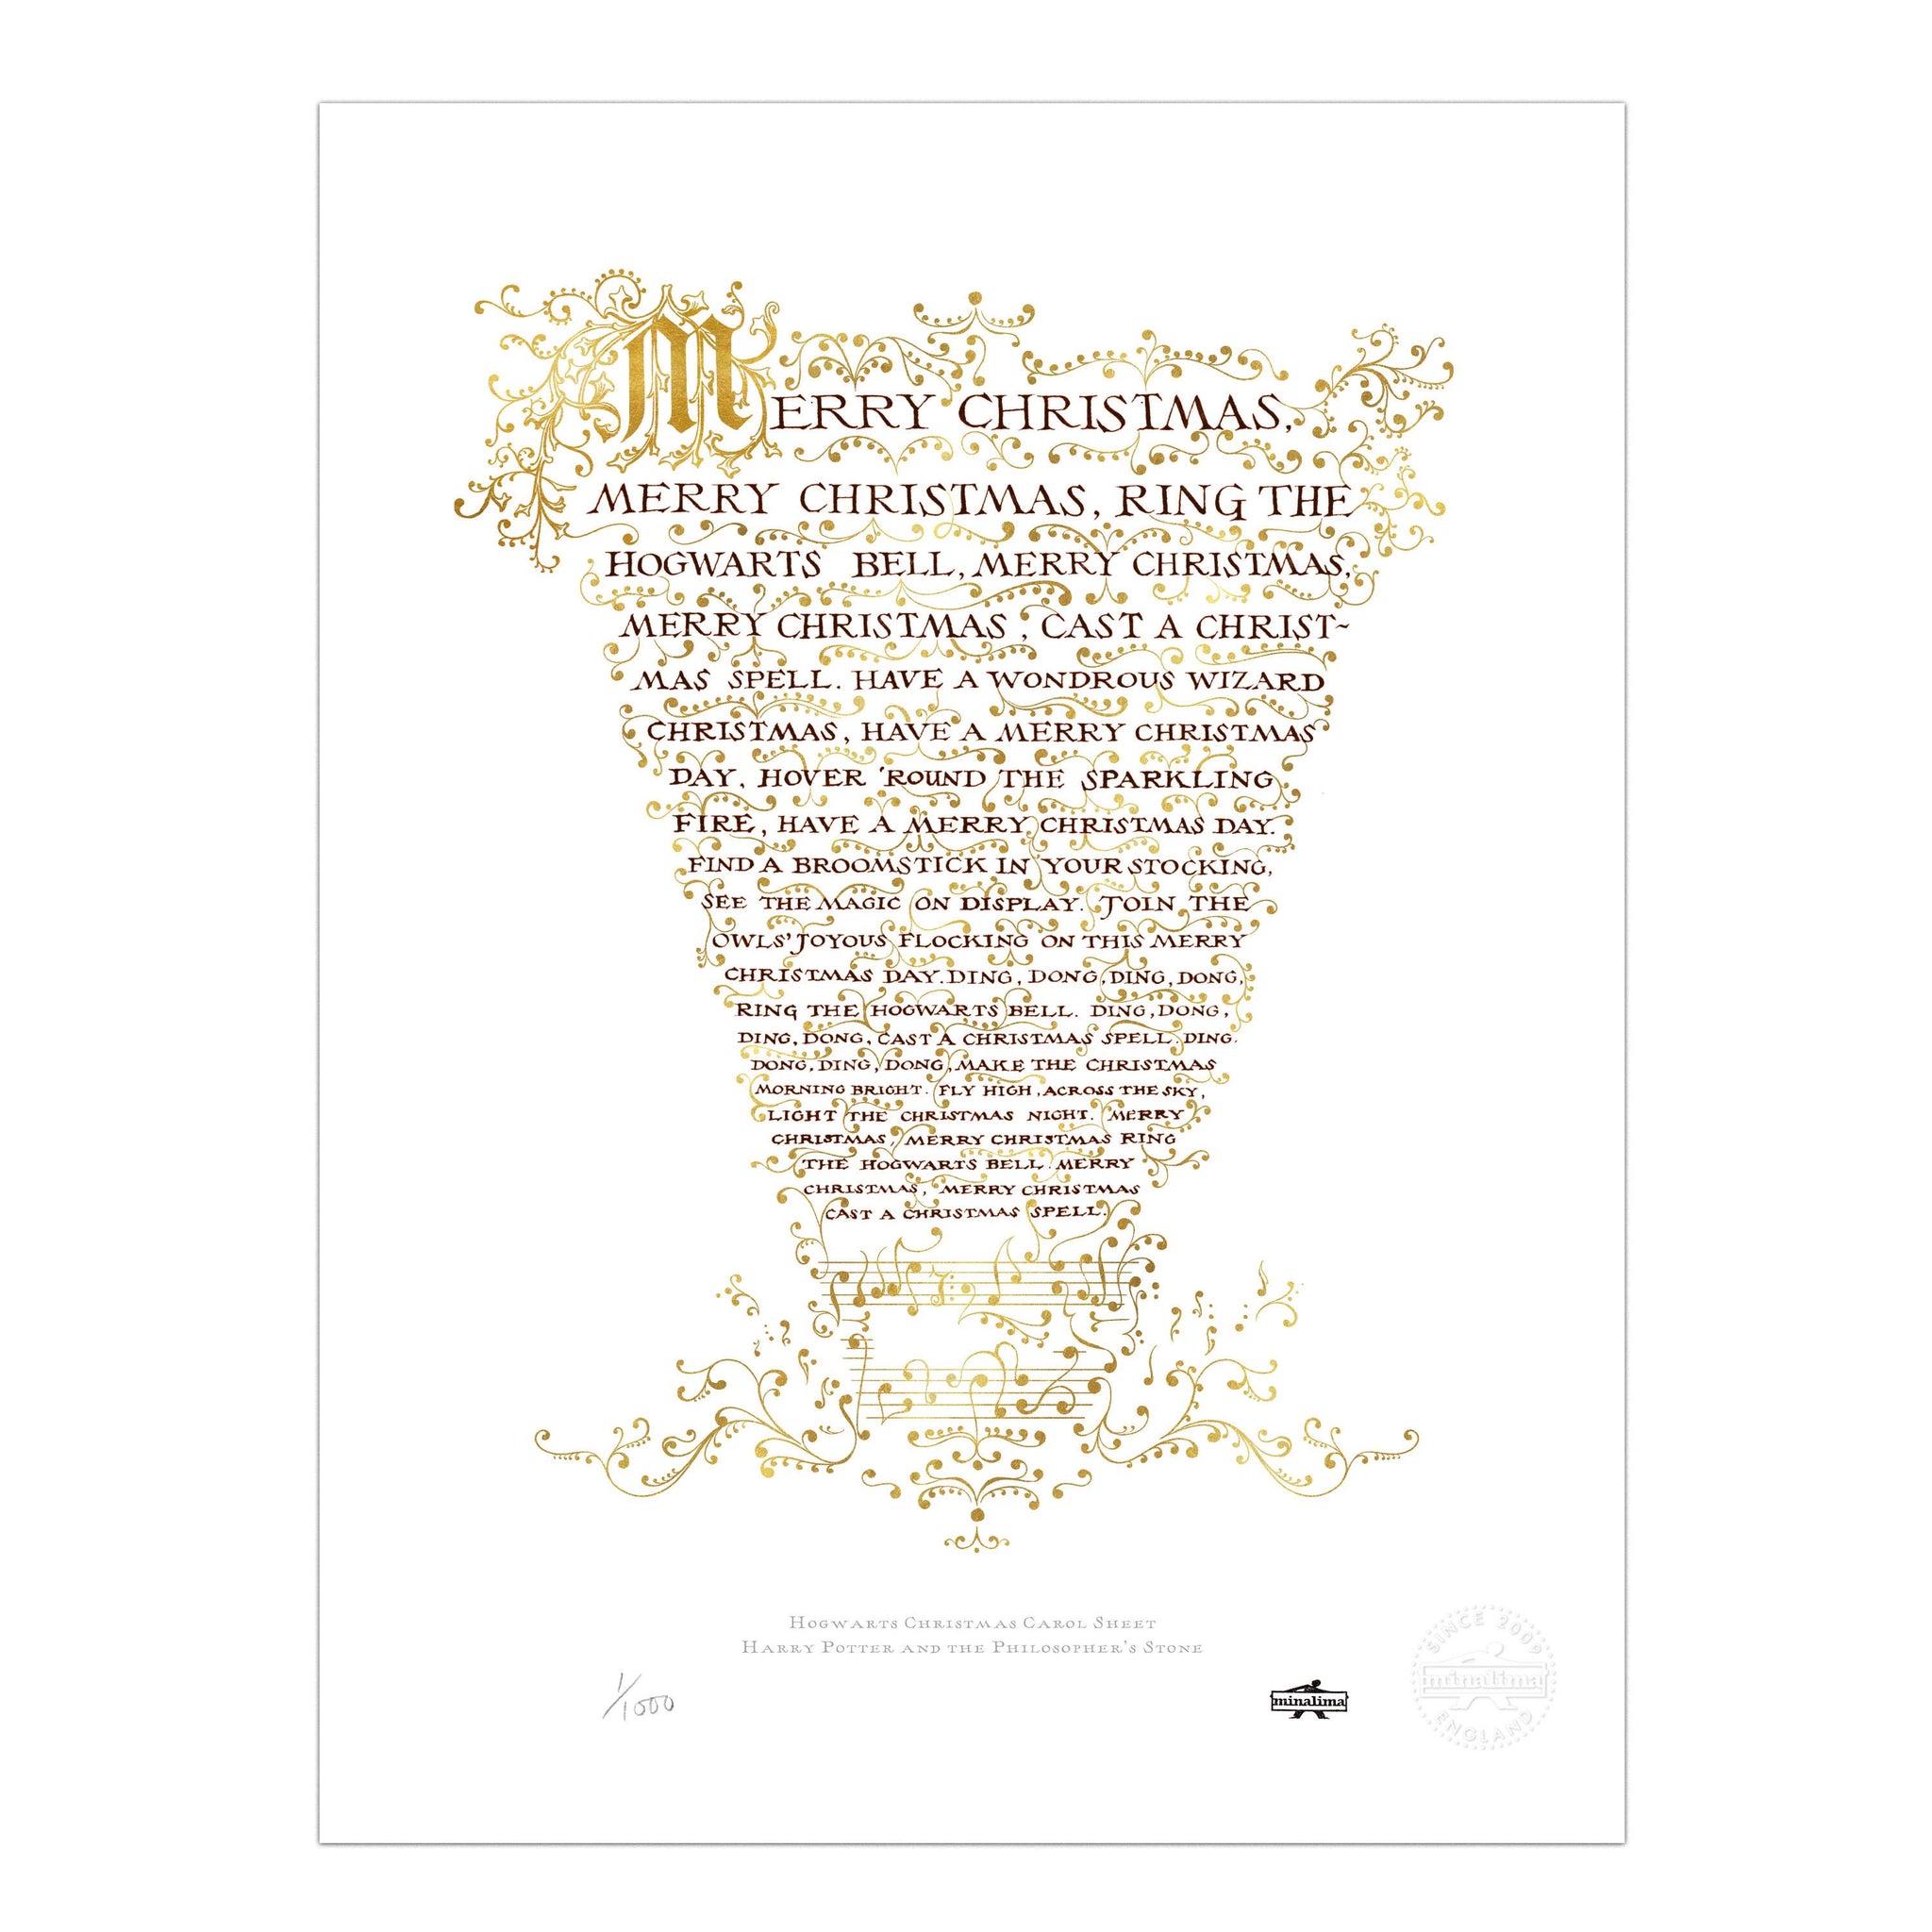 Hogwarts Christmas Carol Sheet Limited Edition Art Print